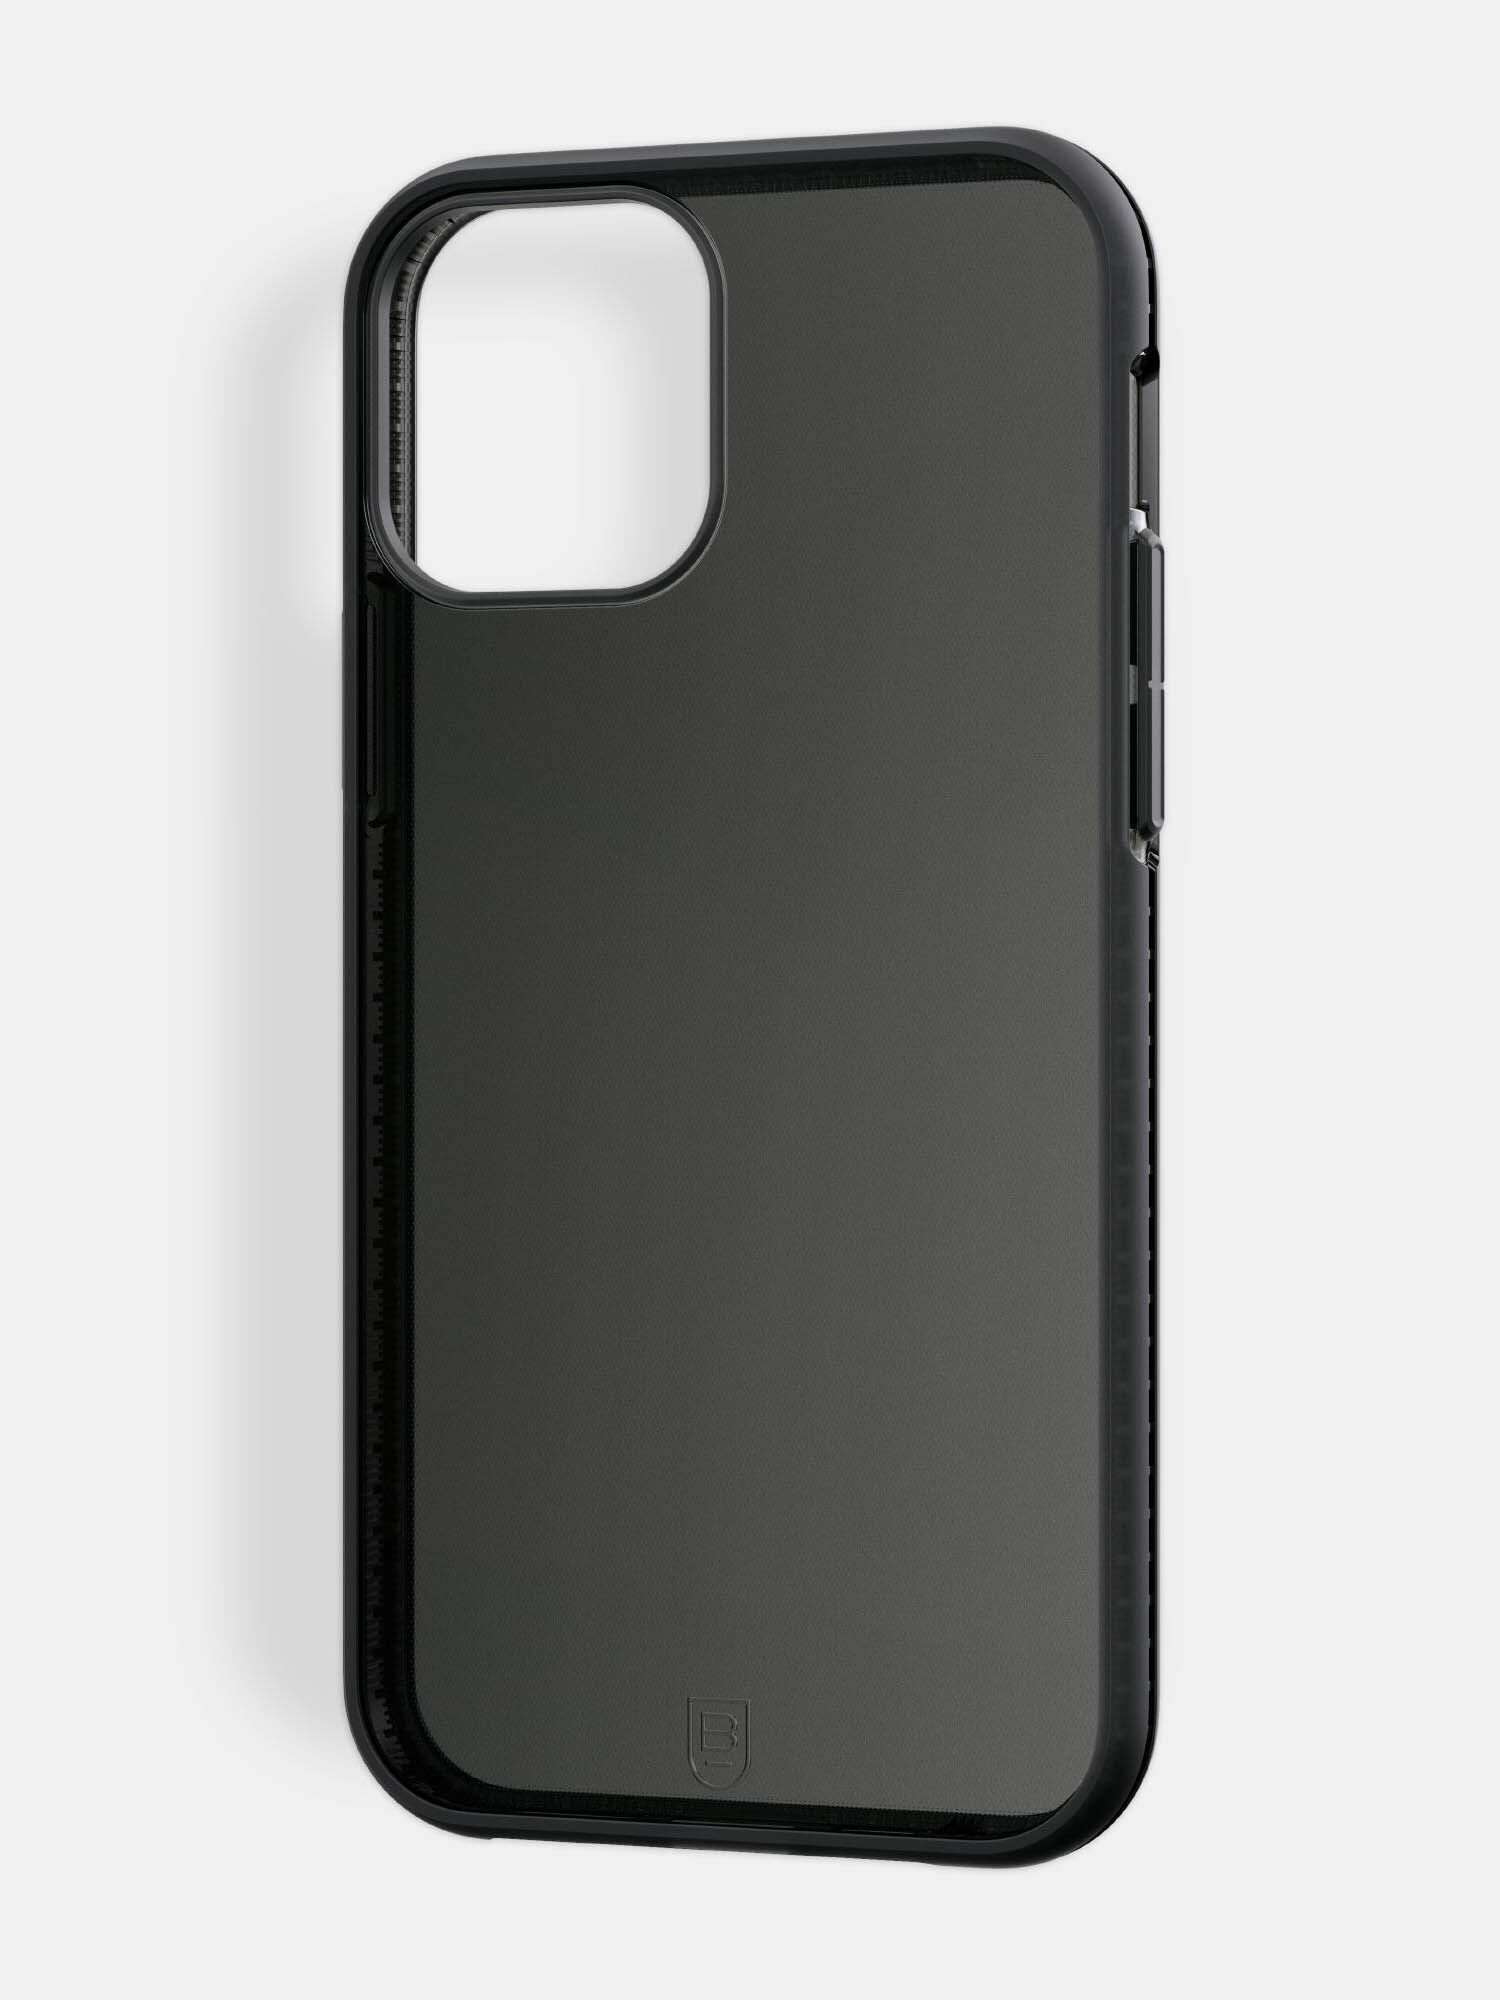 Apple iPhone 12 Mini Cases, Screen Protectors, Covers & Skins